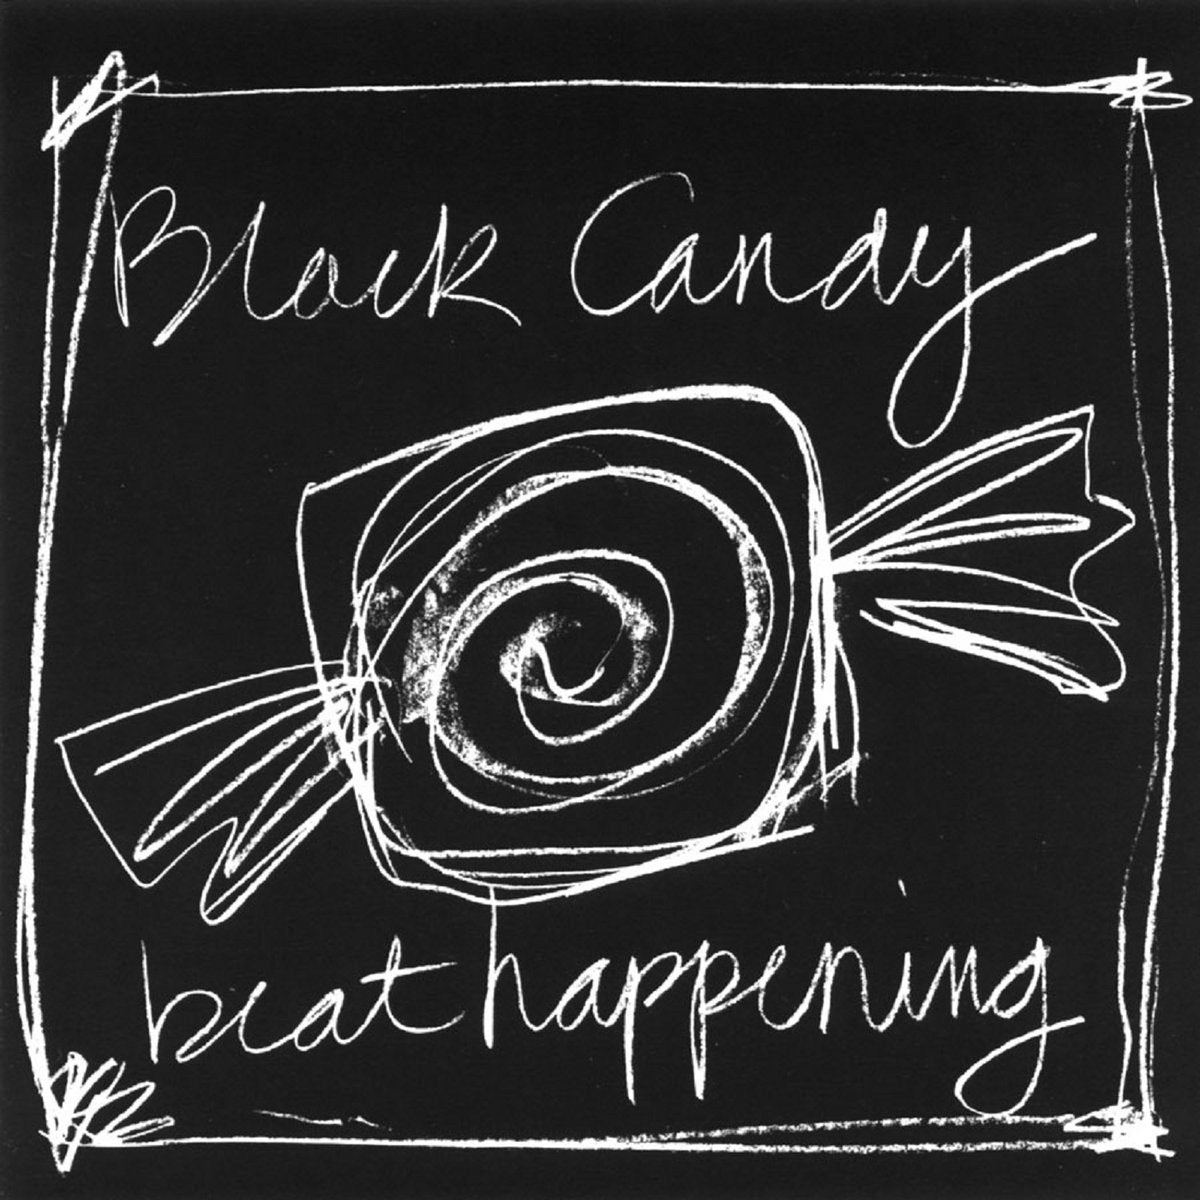 BEAT HAPPENING - BLACK CANDY Vinyl LP